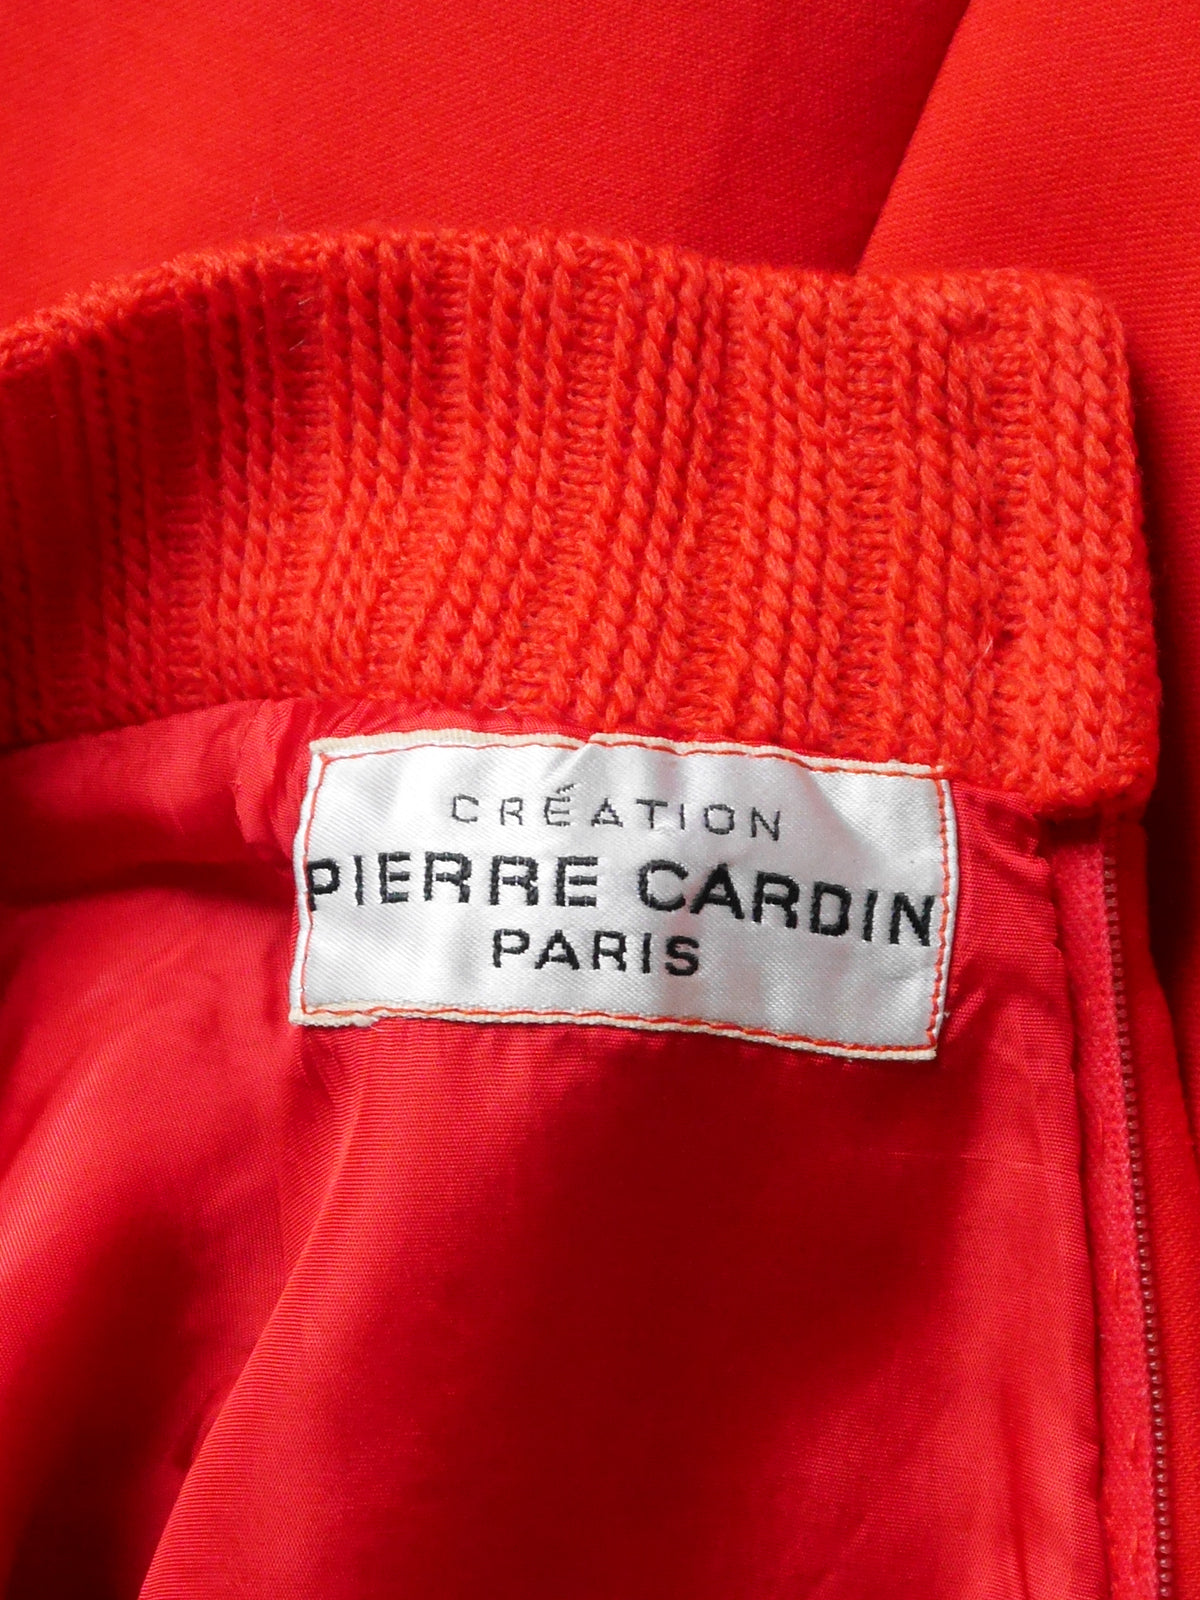 PIERRE CARDIN 1960s Vintage Red Space Age Mod Dress w/ P-shaped Details